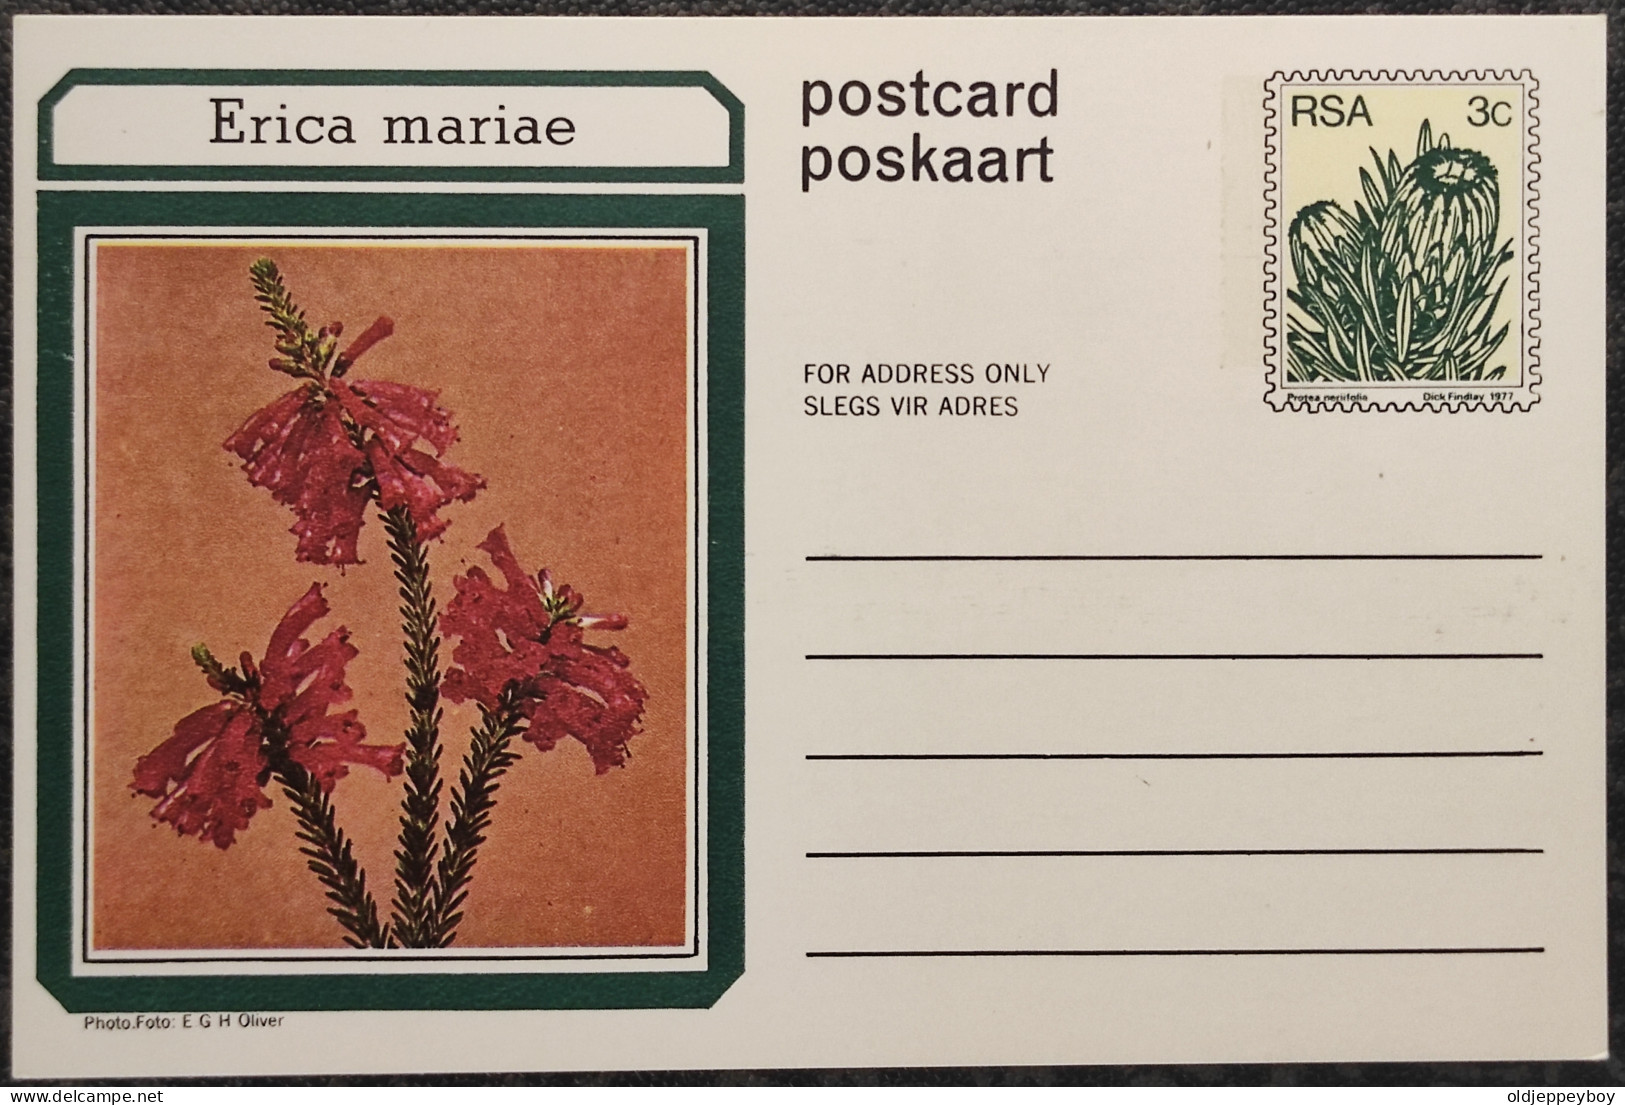 3c SOUTH AFRICA Postal STATIONERY CARD Illus ERICA MARIAE FLOWER Cover Stamps Flowers Rsa - Briefe U. Dokumente